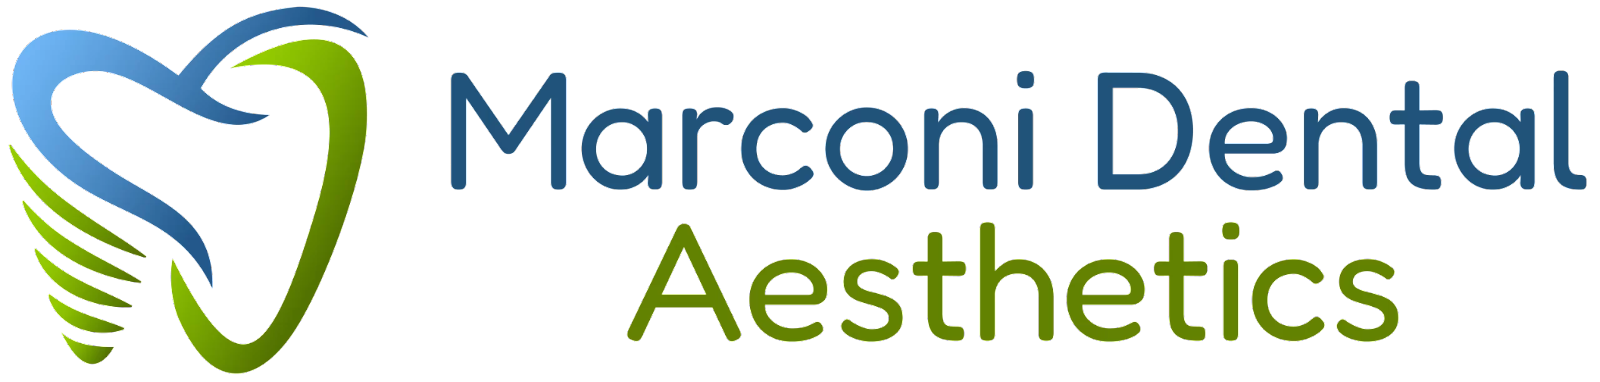 marconi dental aesthetics logo